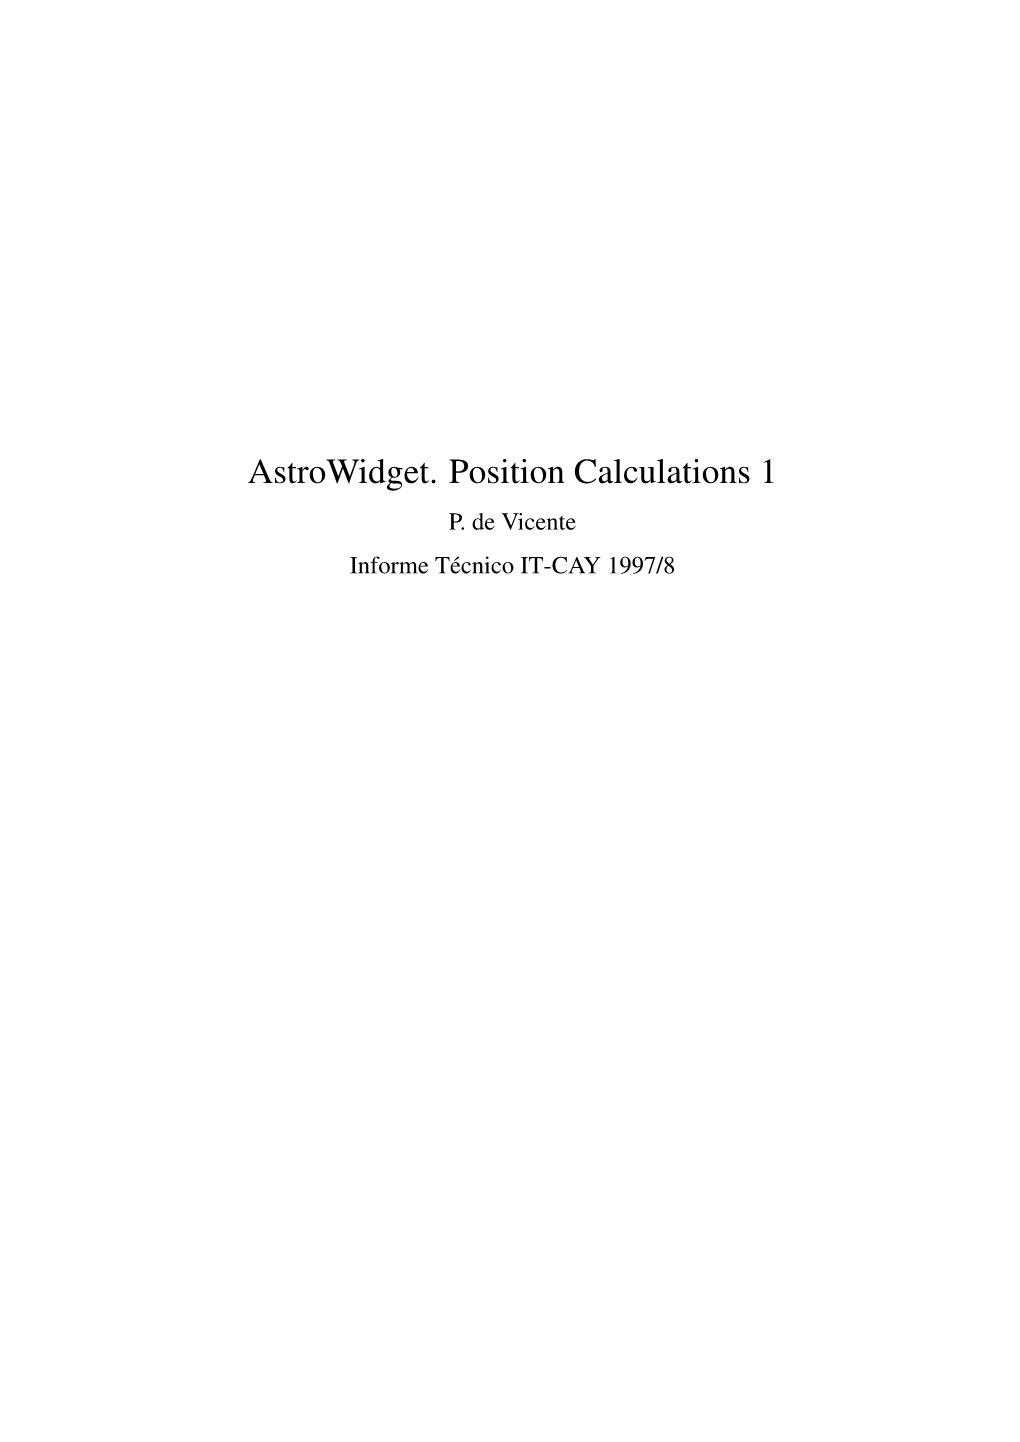 Astrowidget. Position Calculations 1 P